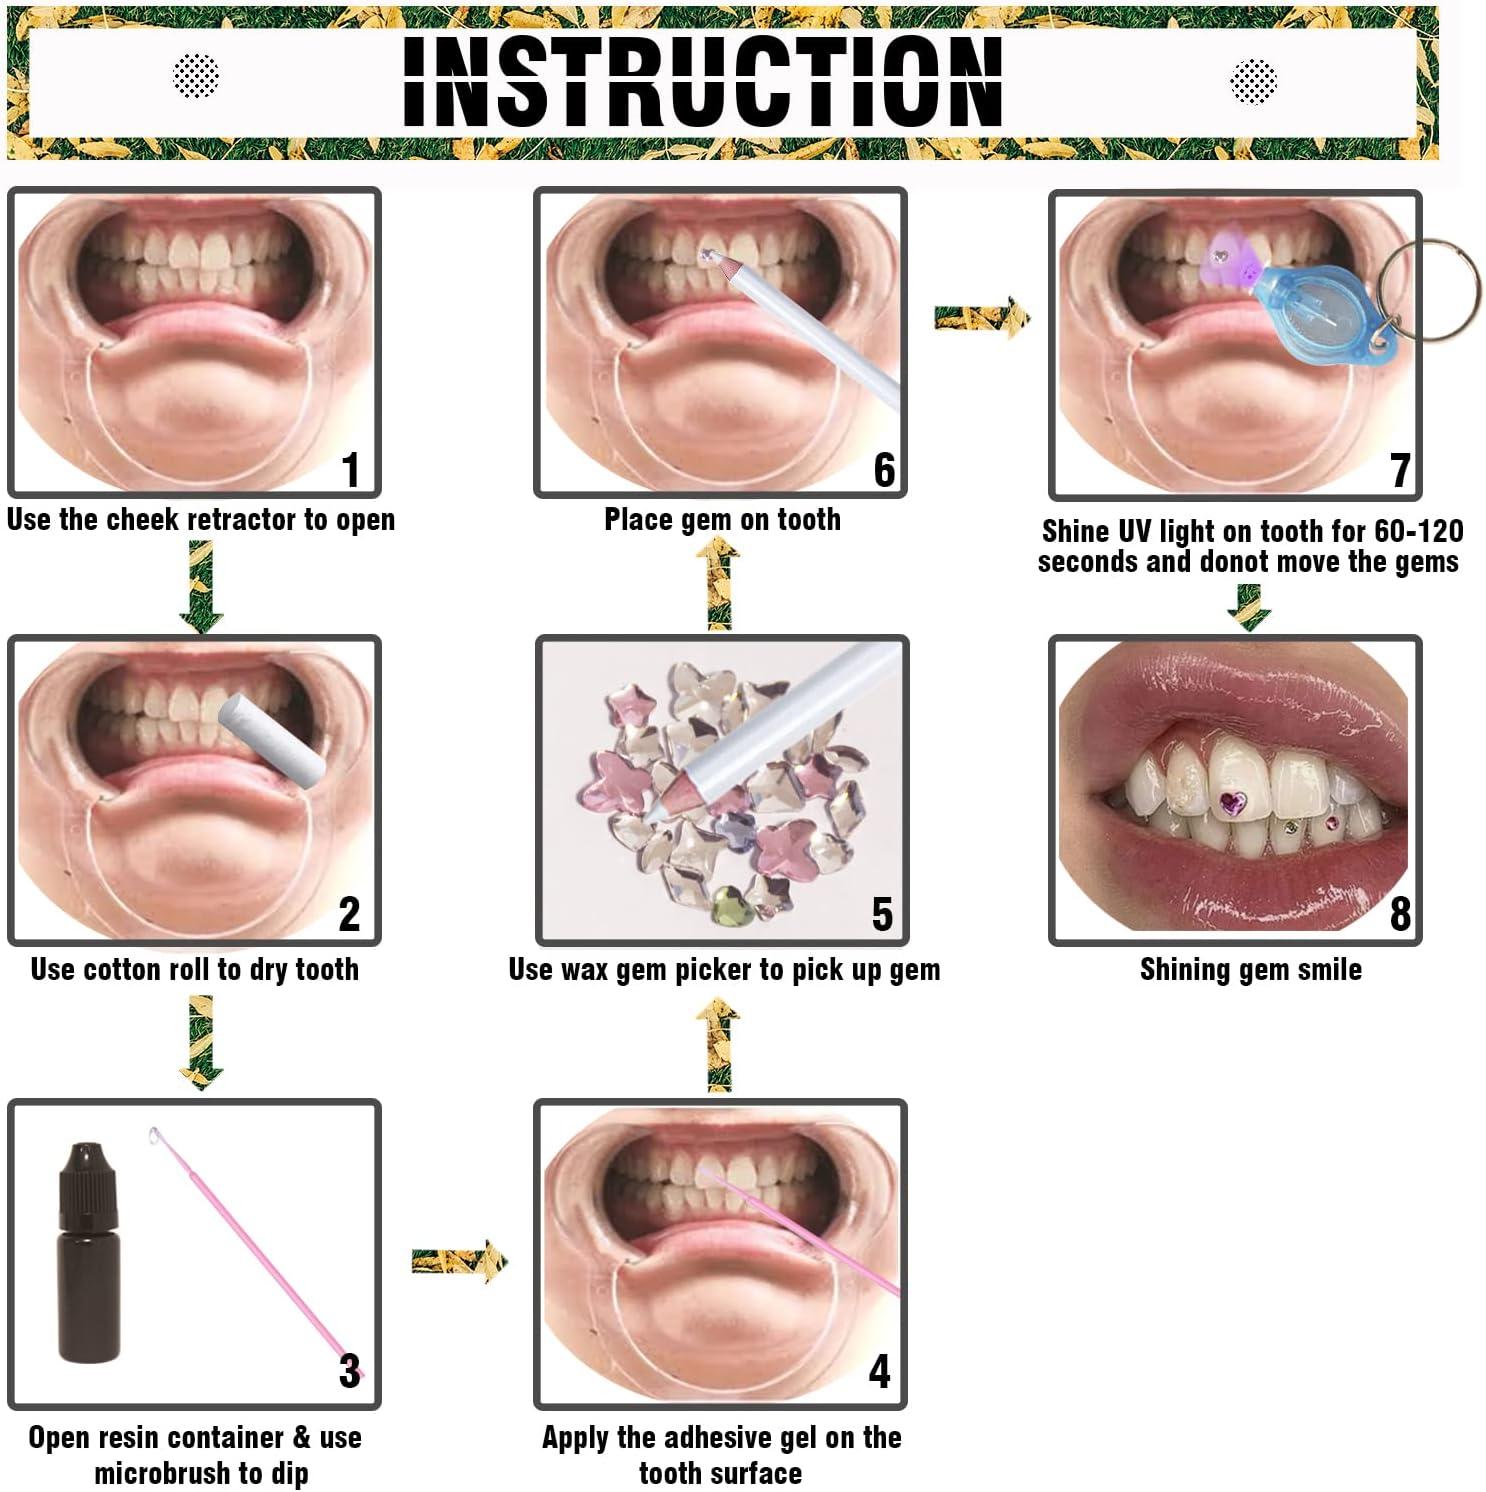 The Original DIY Temporary Tooth Gem Starter Kit